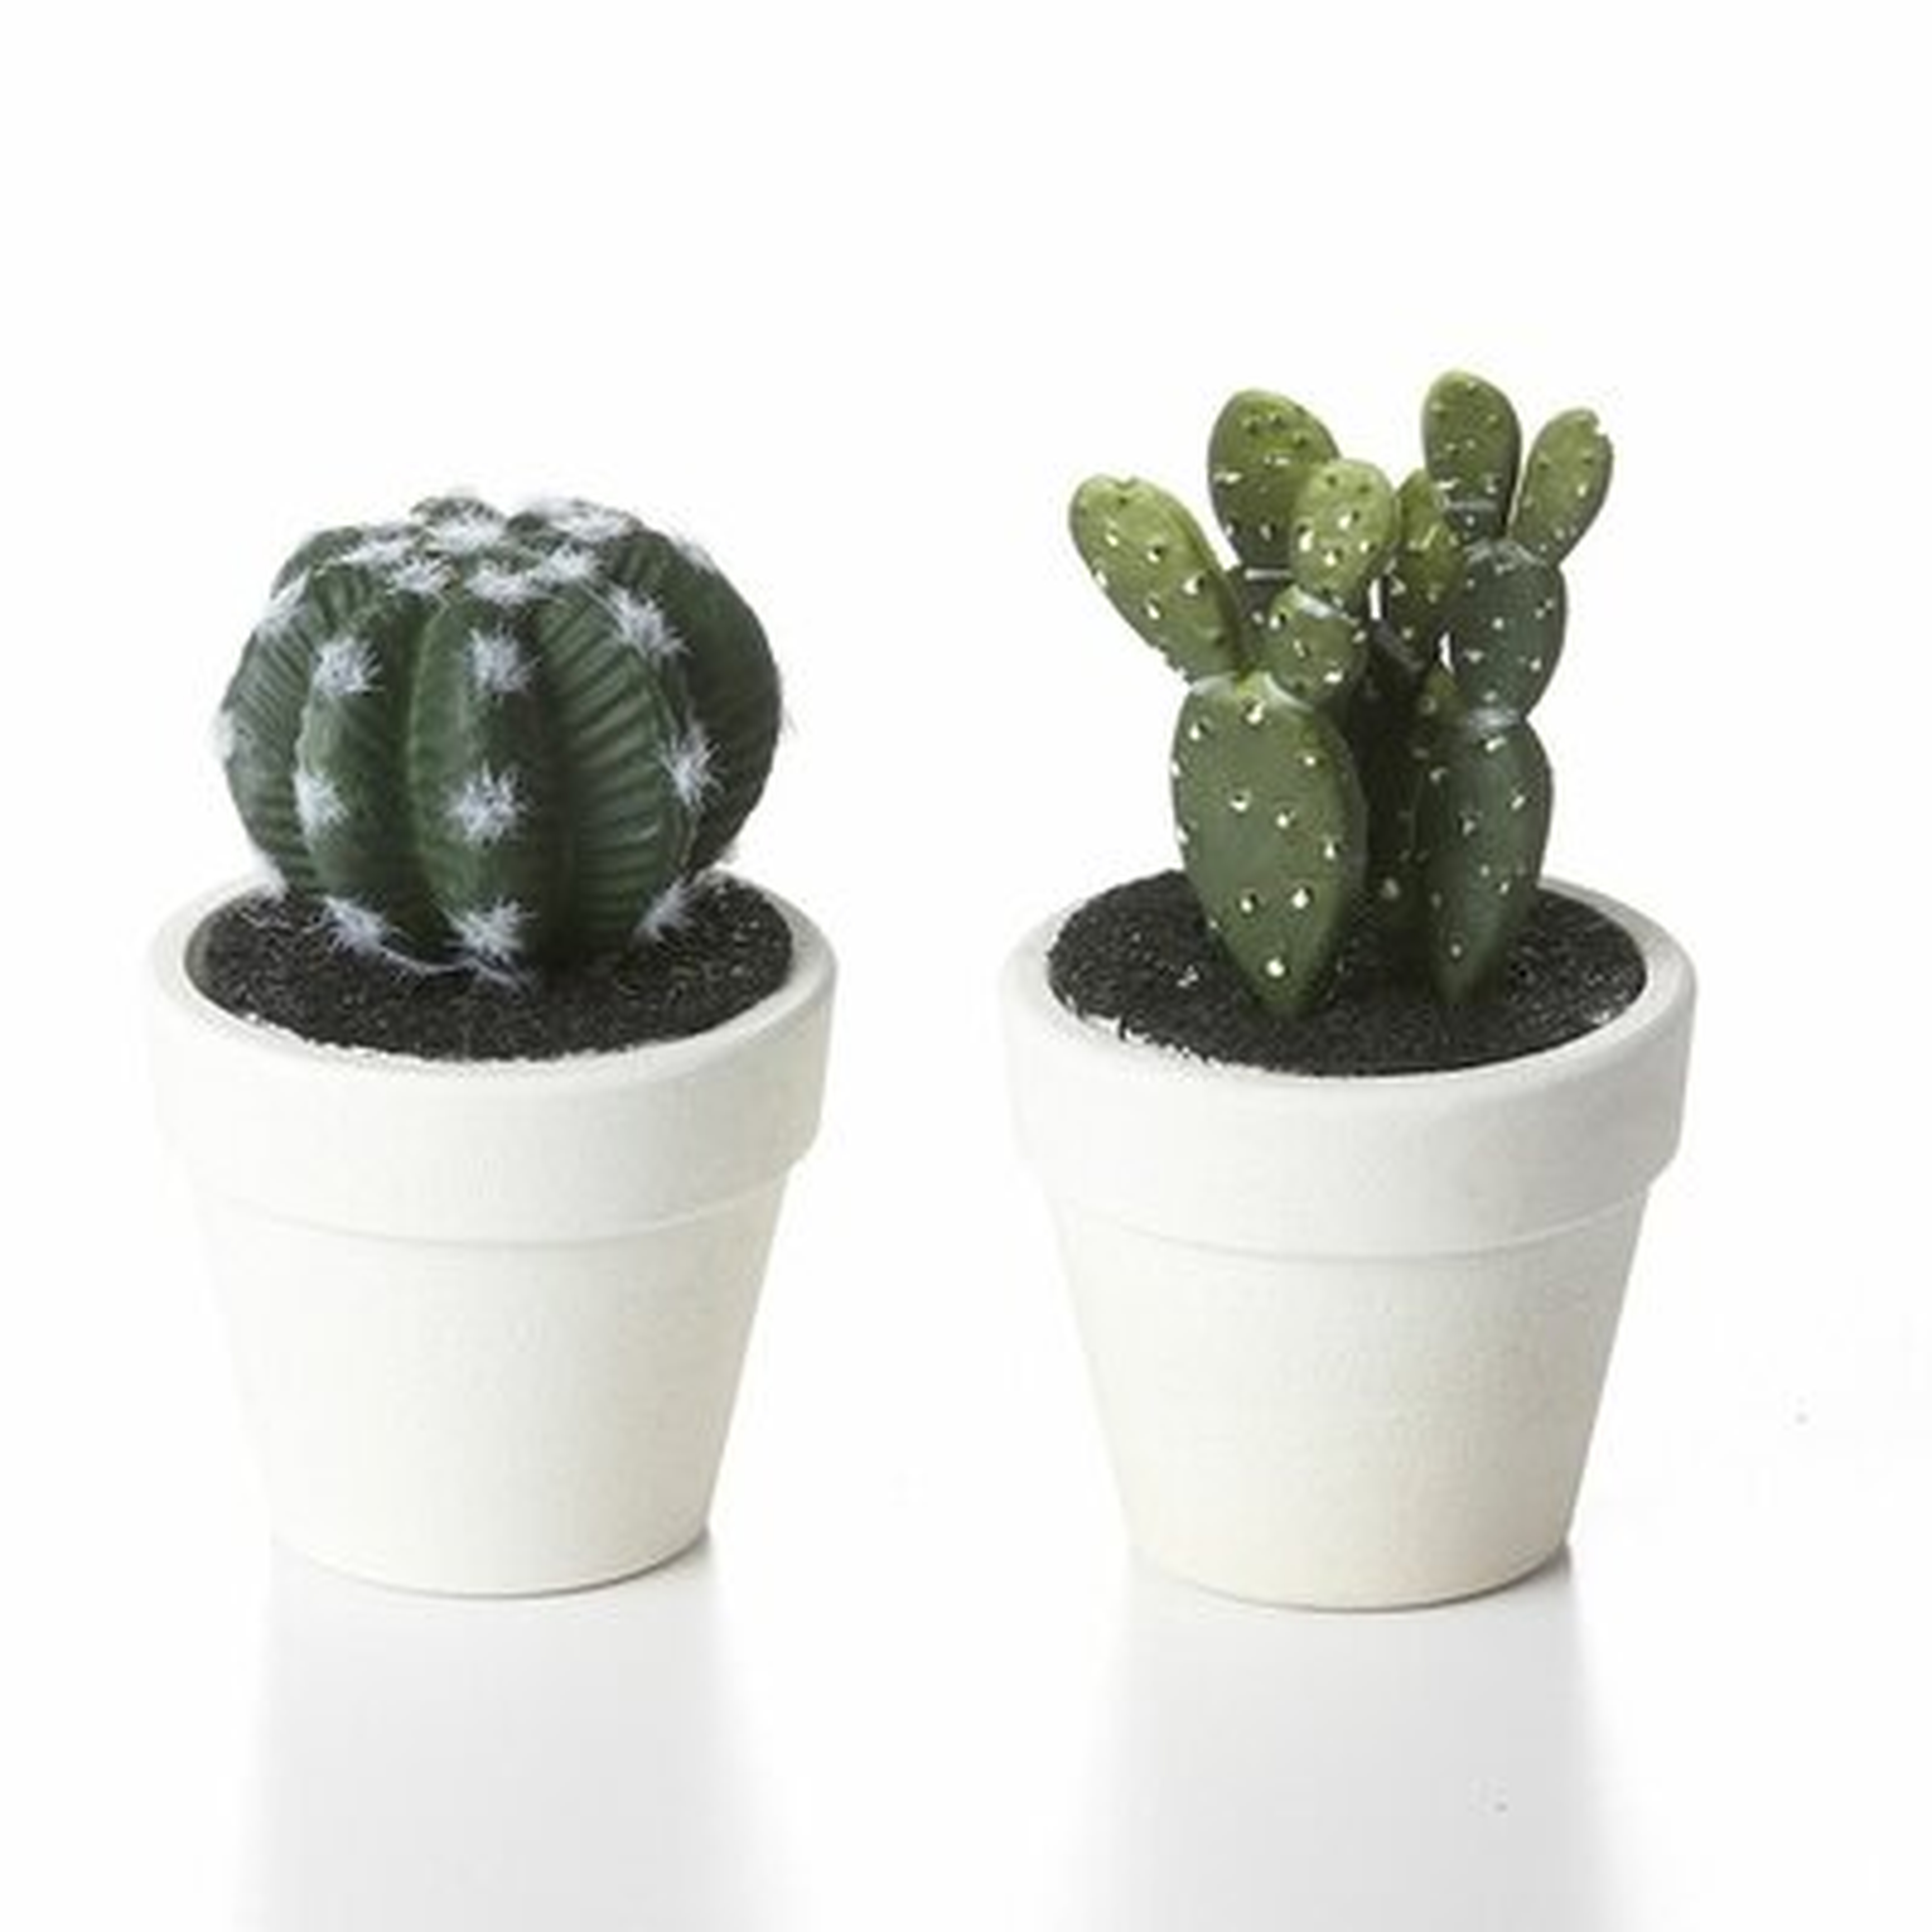 2 Cactus Plant in Pot Set - Wayfair